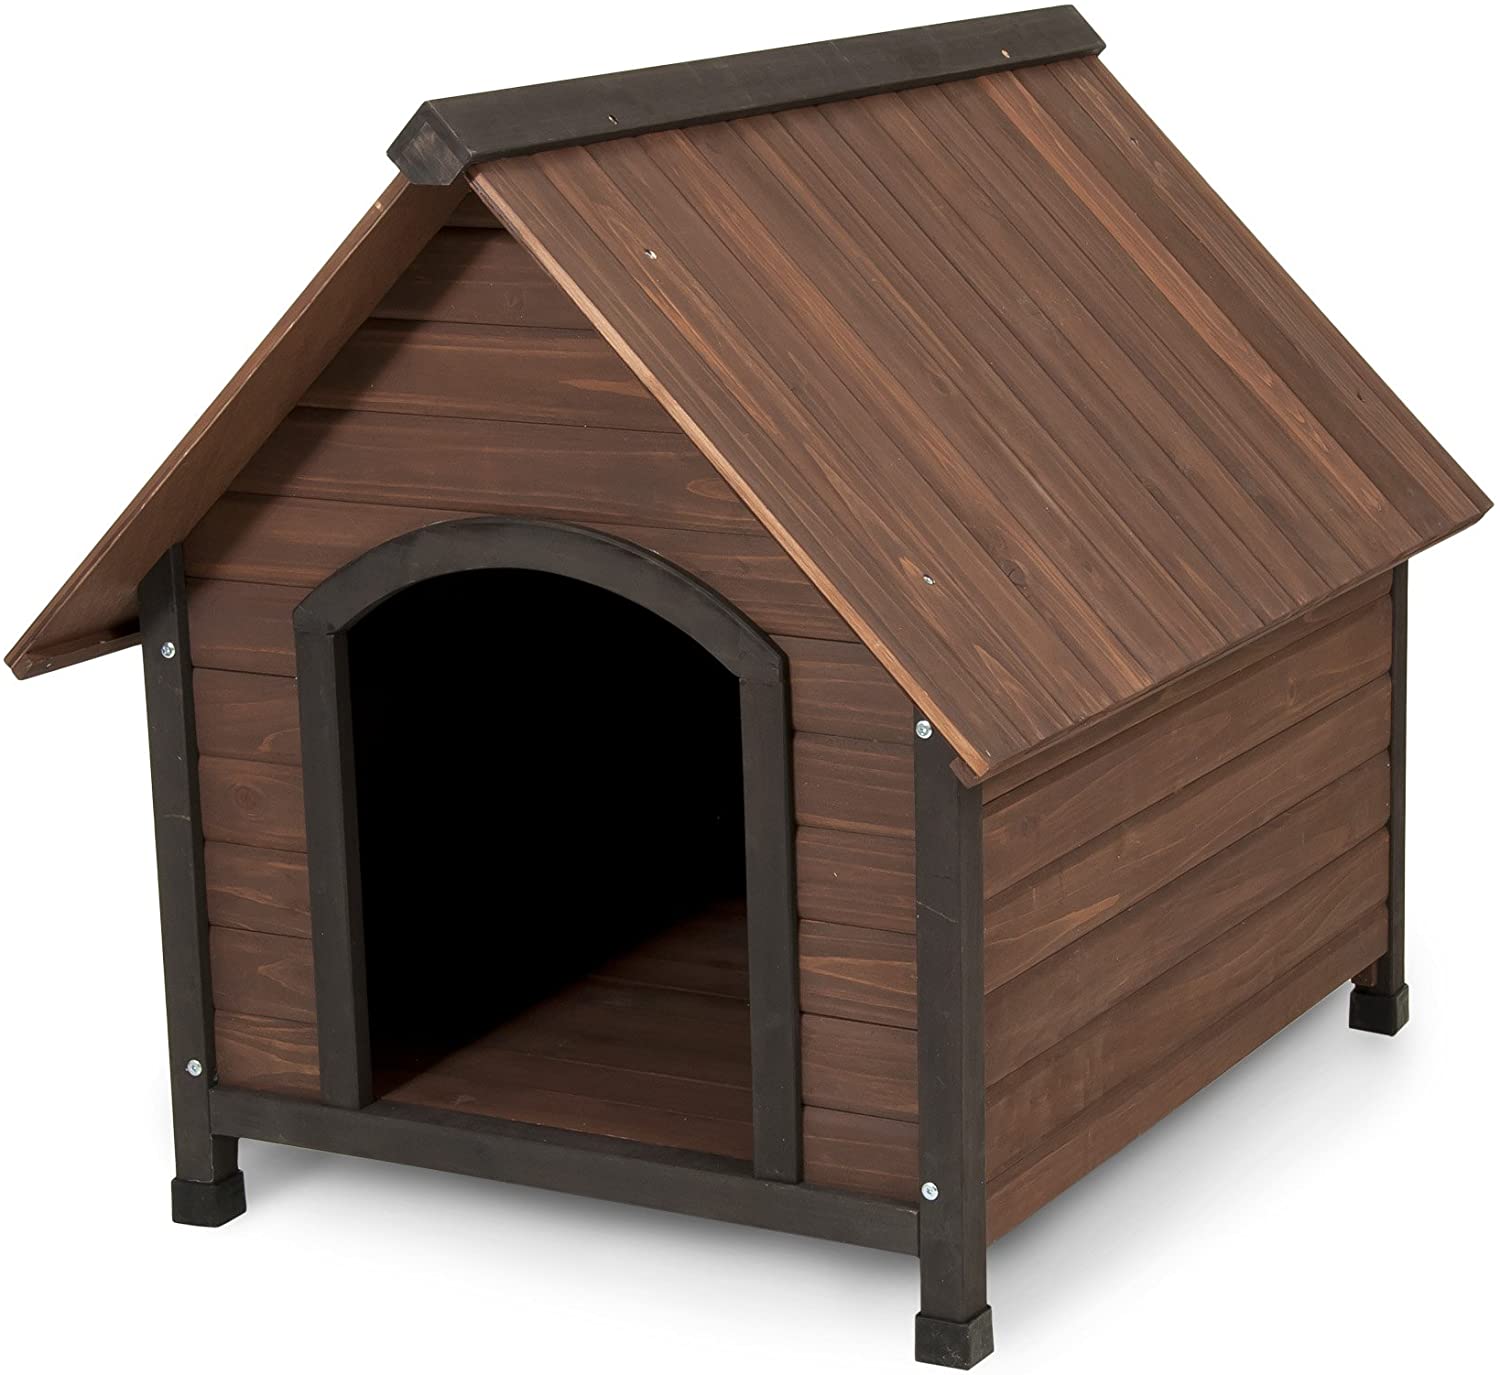 Best Dog House for Golden Retriever â Top 3 Picks!